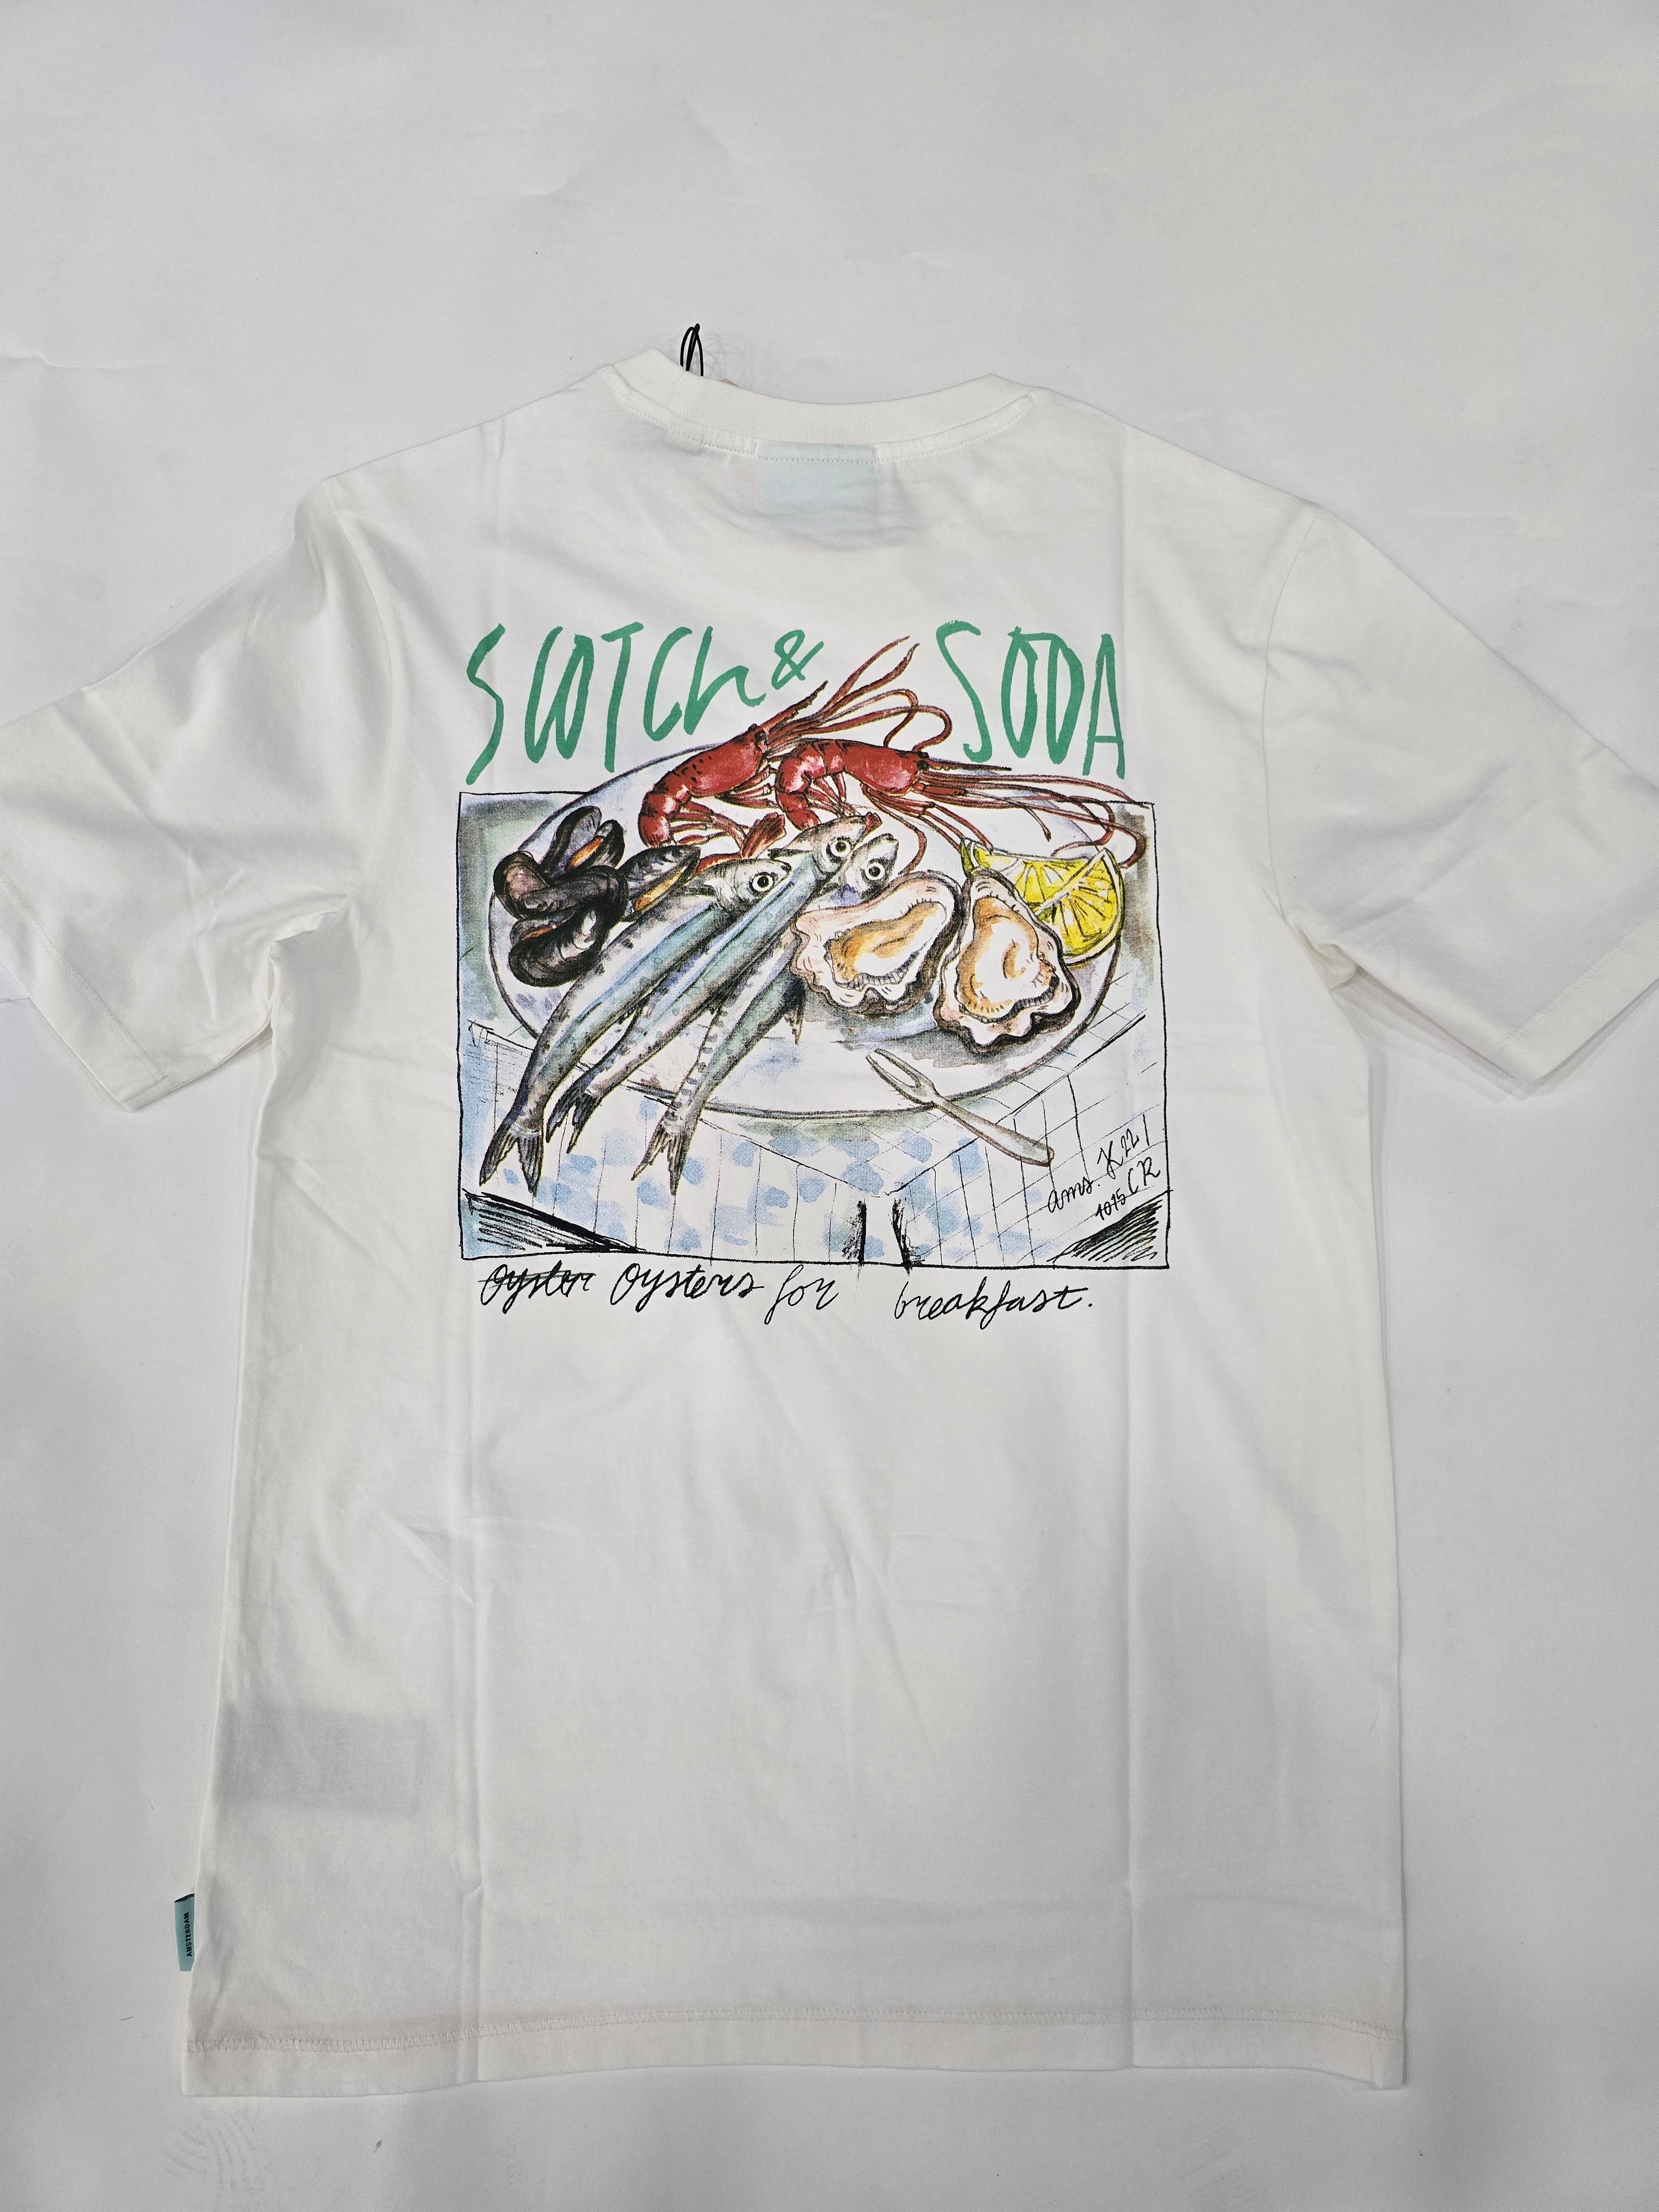 SCOTCH & SODA Front Back Artwork T-Shirt